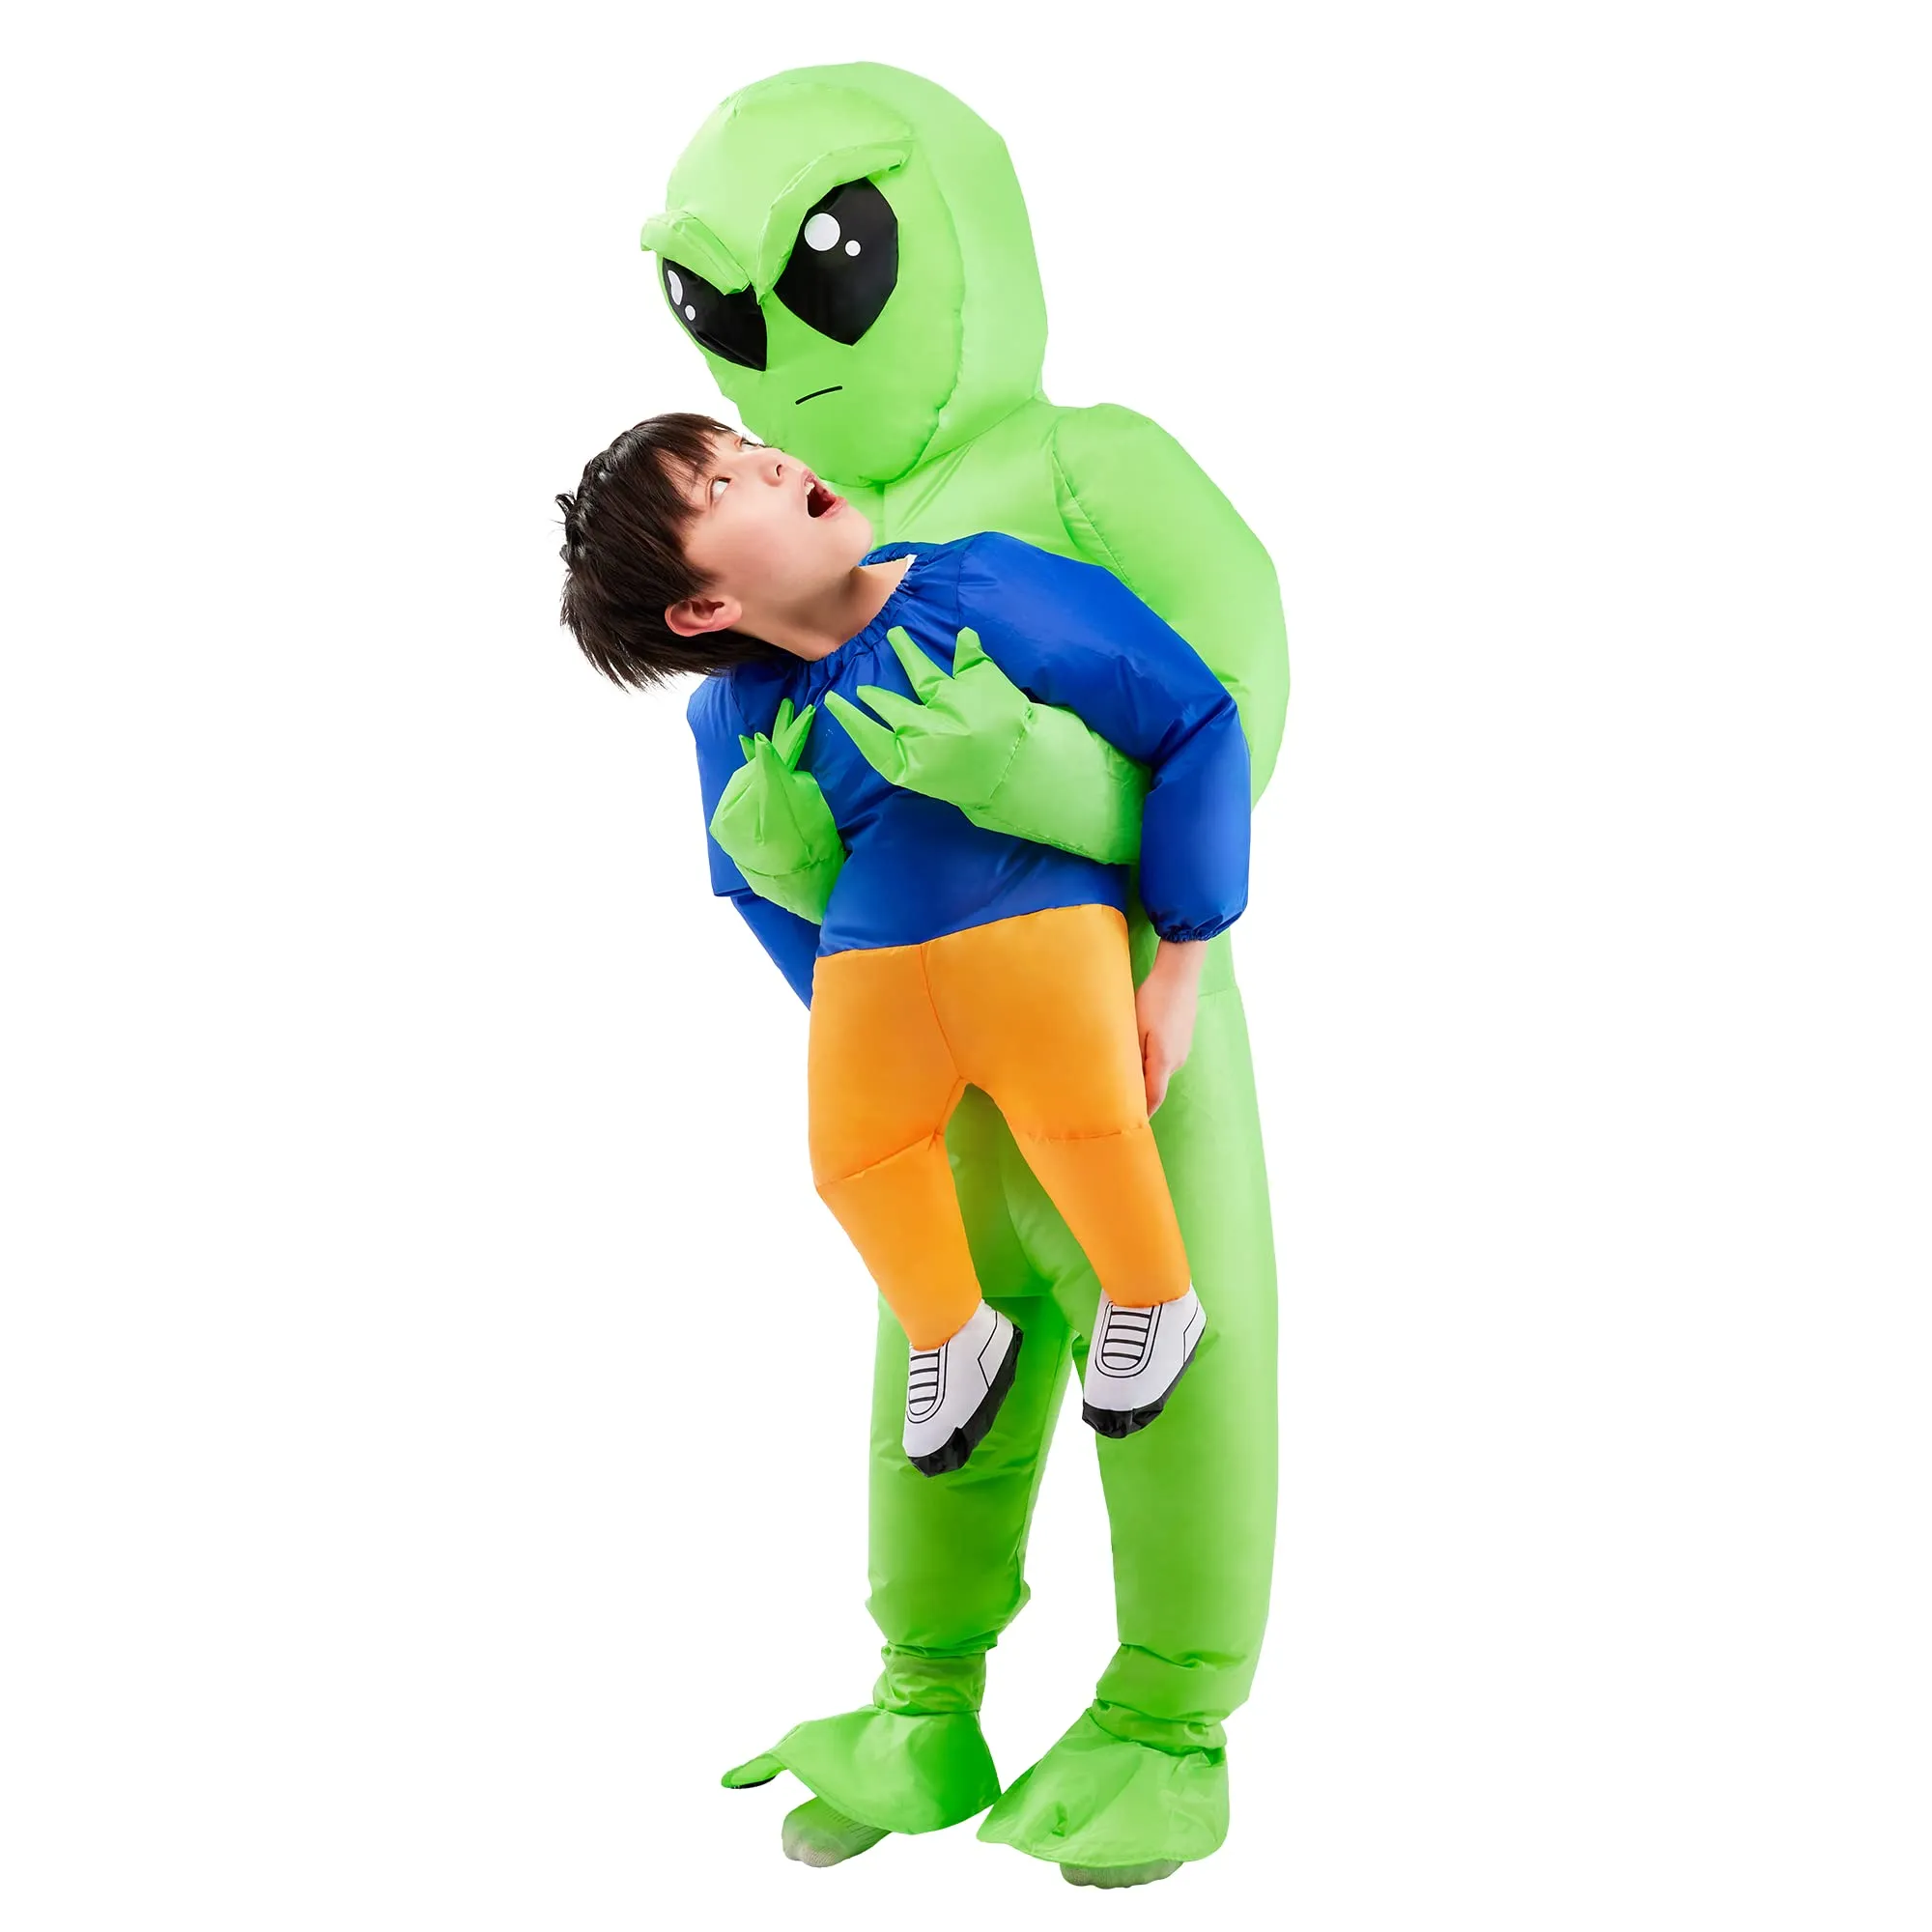 Kids inflatable alien costume